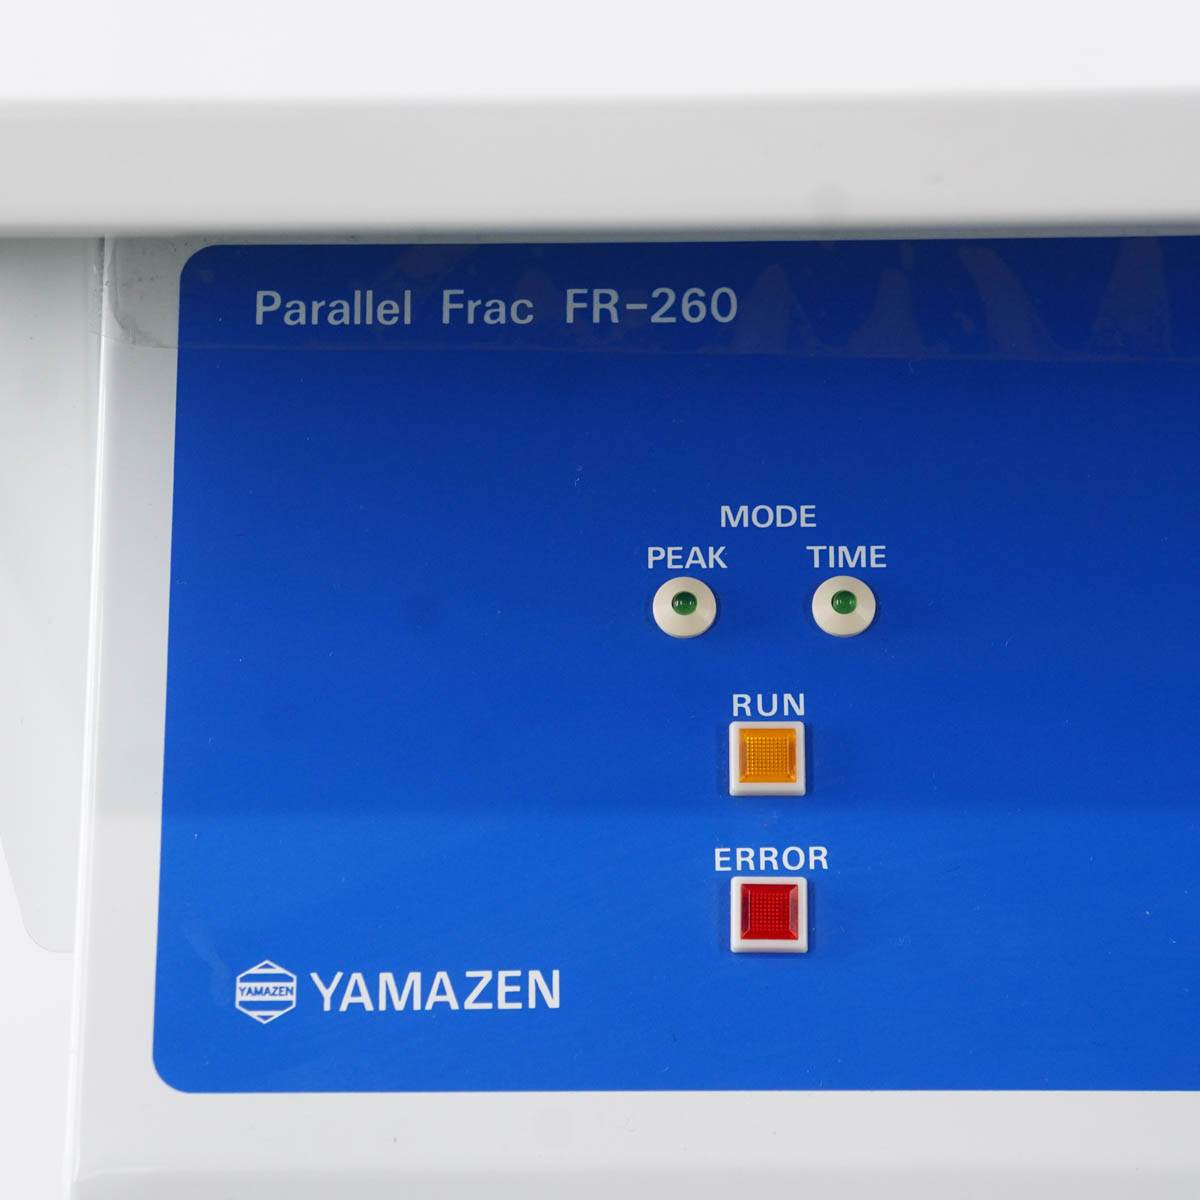 [DW]USED 8日保証 セット YAMAZEN Parallel Frac FR-260 W-Prep 2XY PUMP 580D HPLC 液体クロマトグラフ 液クロ[ST03999-0009] - 19